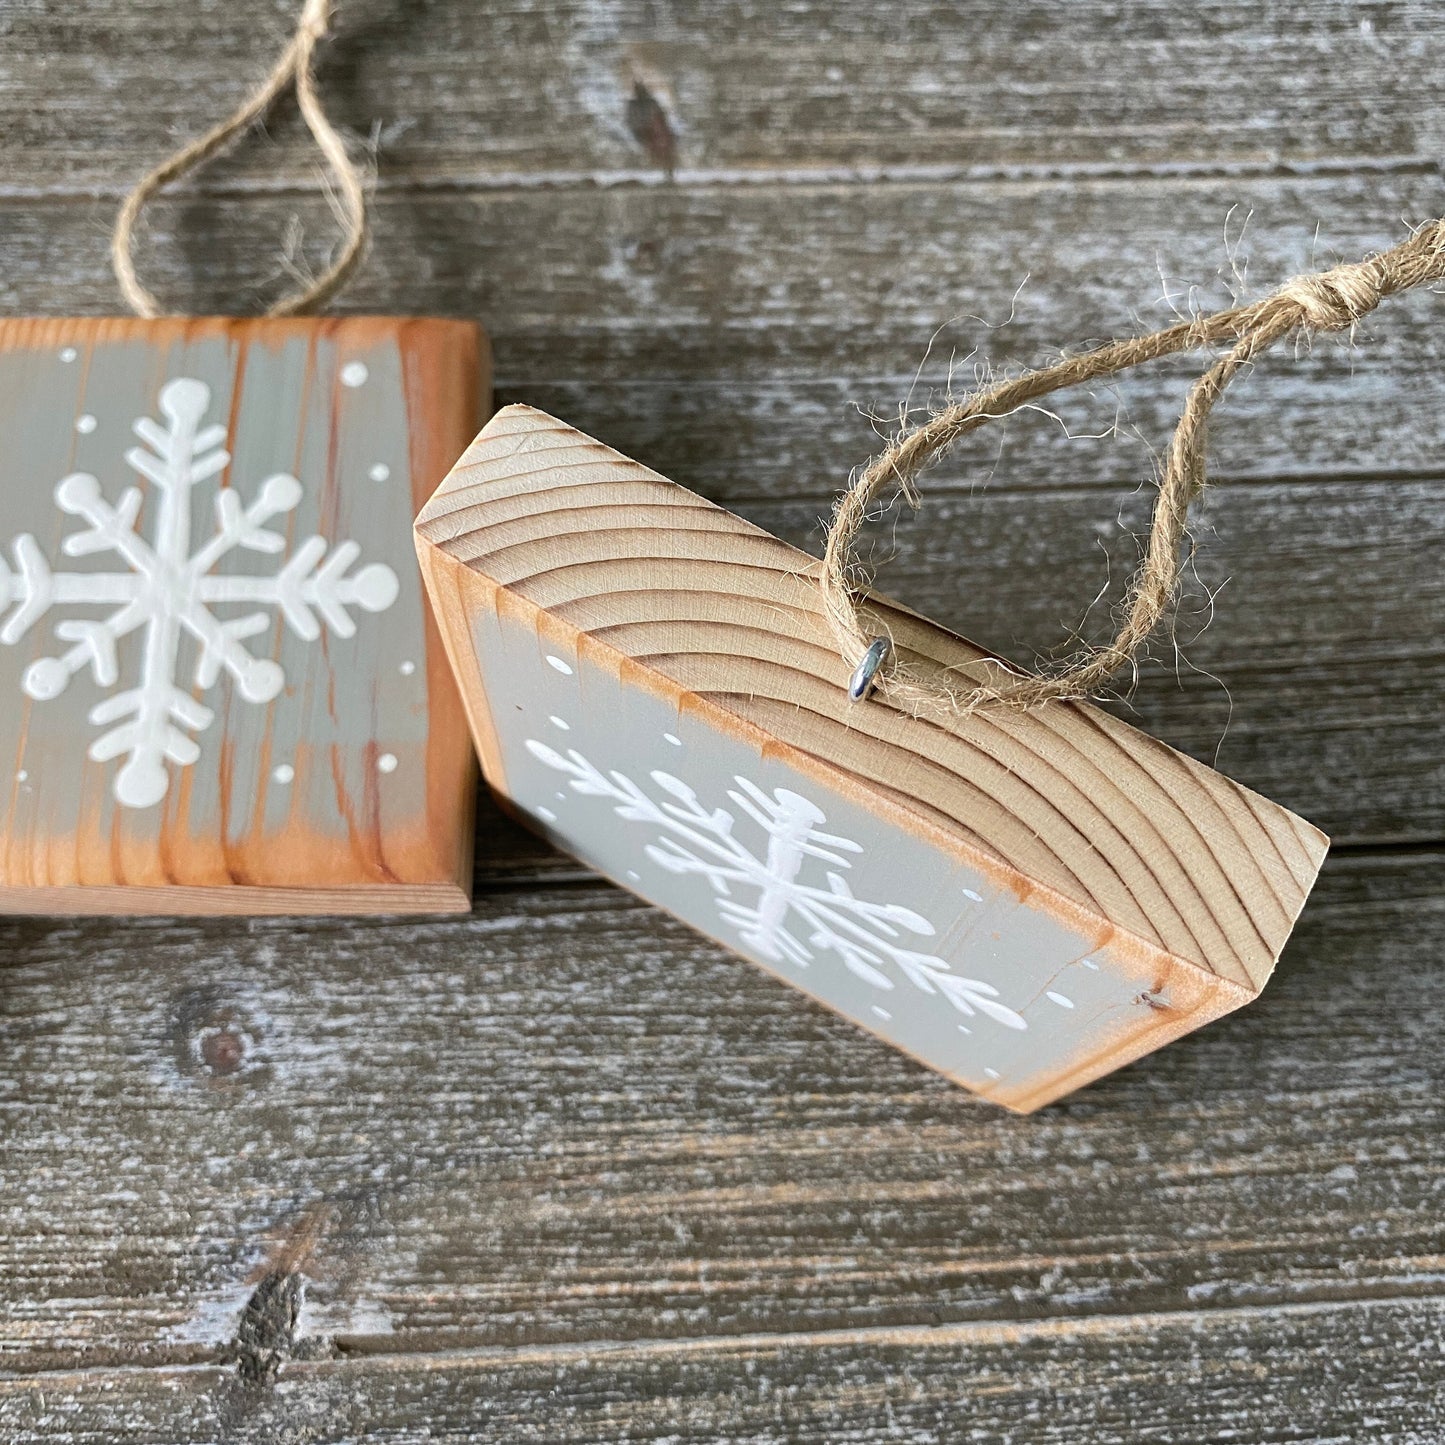 Christmas Decor - Snowflake Ornament - Light Gray